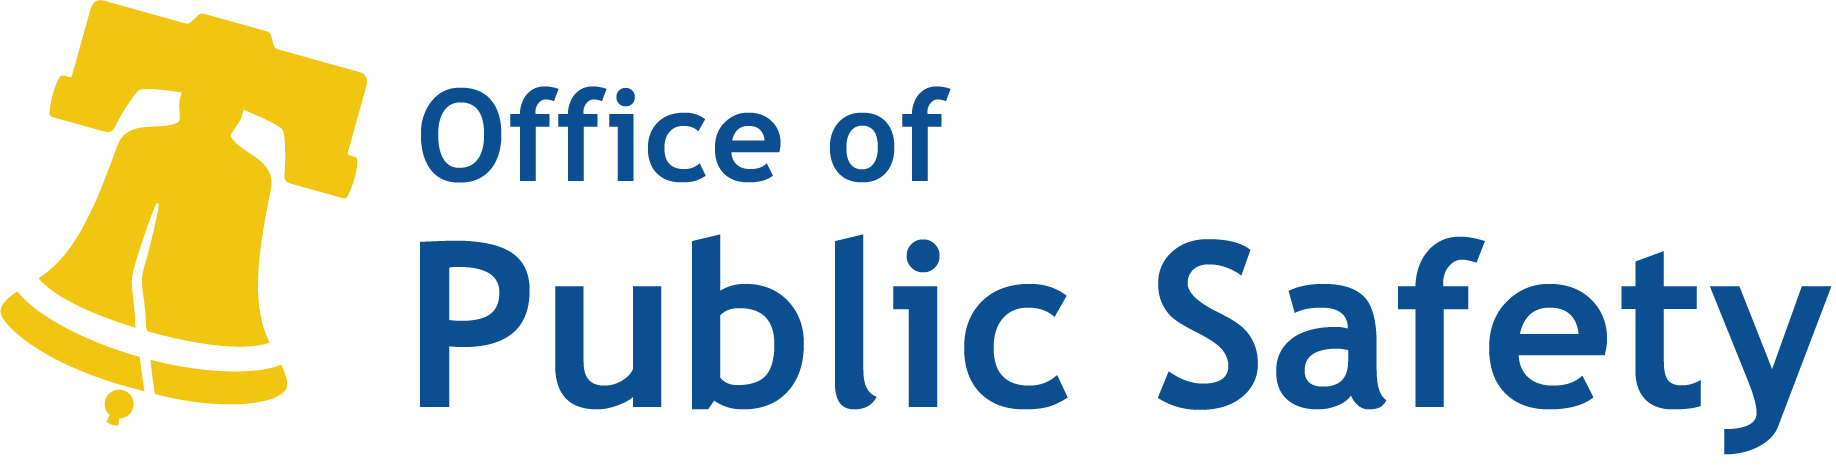 Office of Public Safety logo